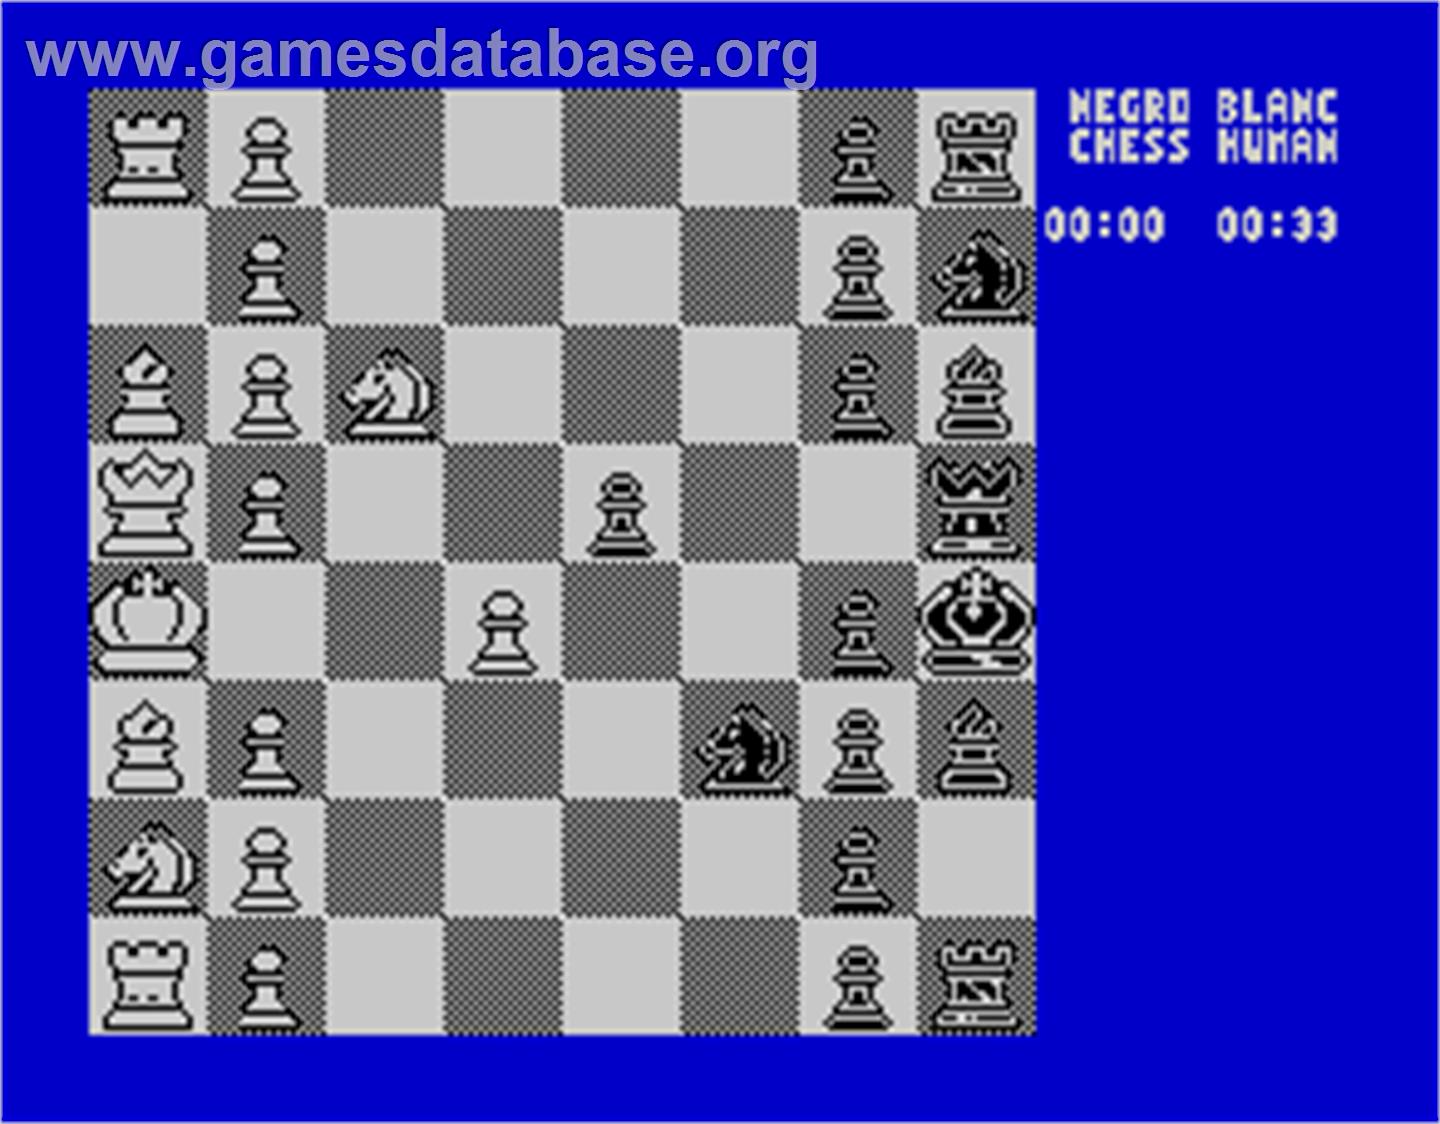 The Chessmaster 2000 - Sinclair ZX Spectrum - Artwork - In Game